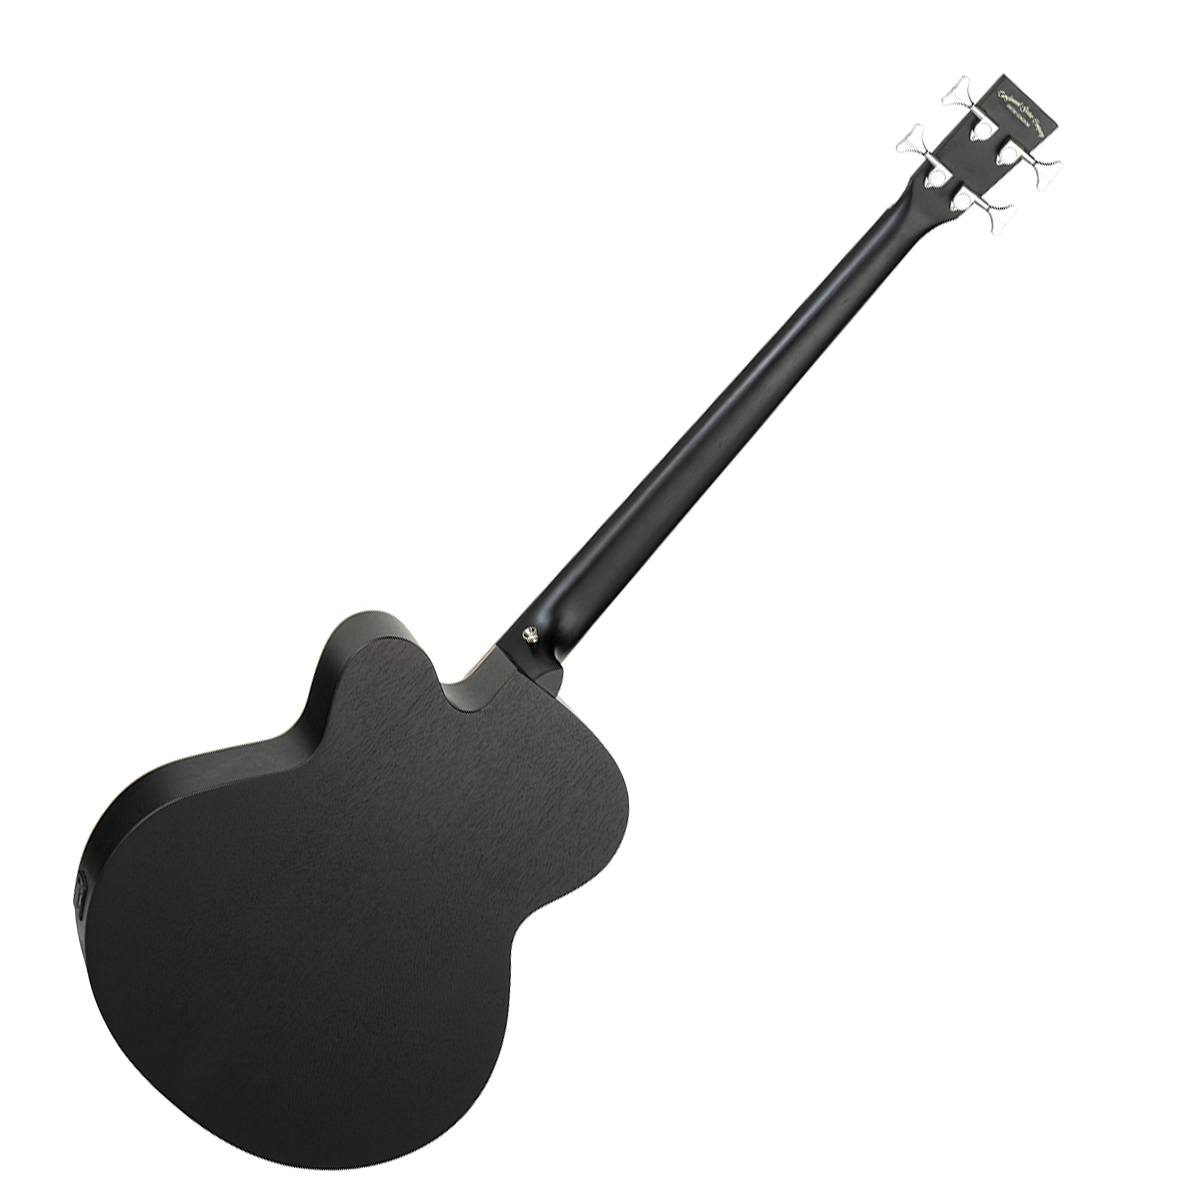 Tanglewood Blackbird Super Jumbo Electro Acoustic Bass Guitar - Smokestack Black Satin